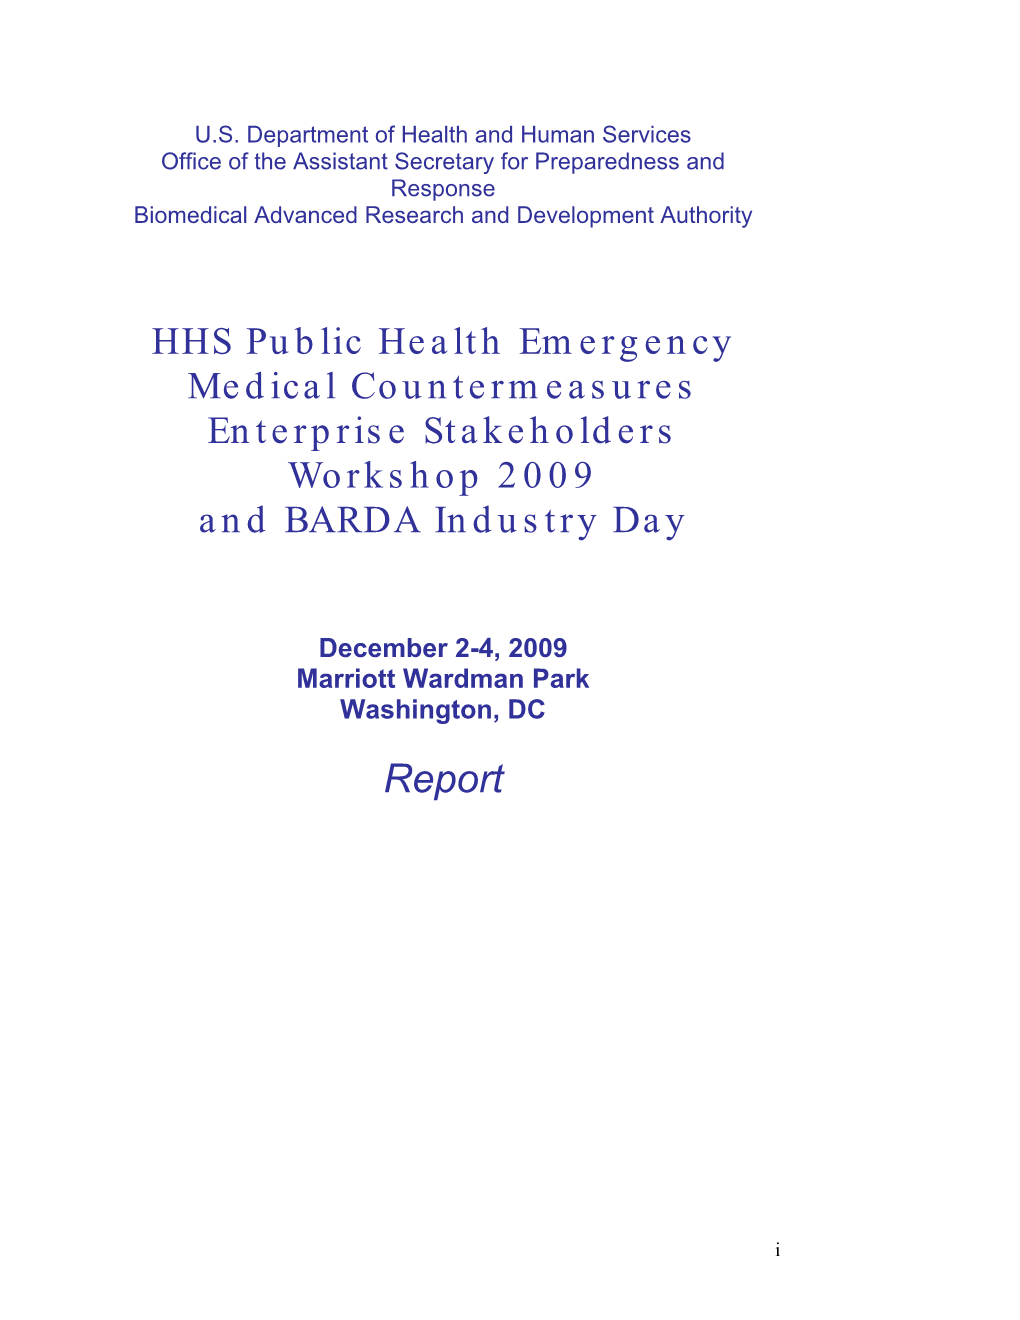 2009 HHS PHEMCE Stakeholders